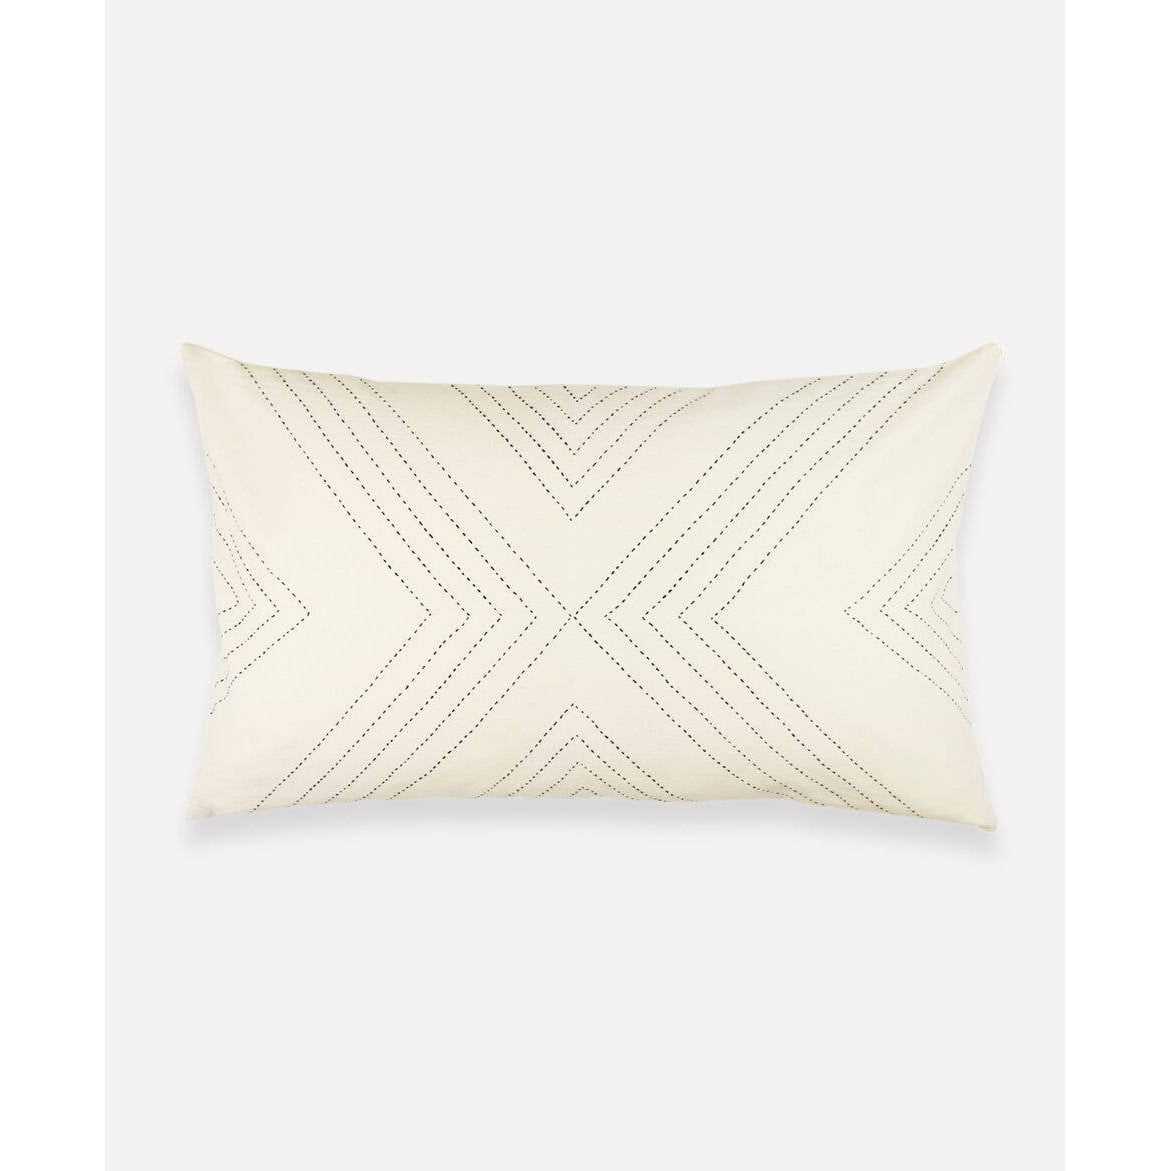 Geometric Lumbar Pillow Cover: Bone